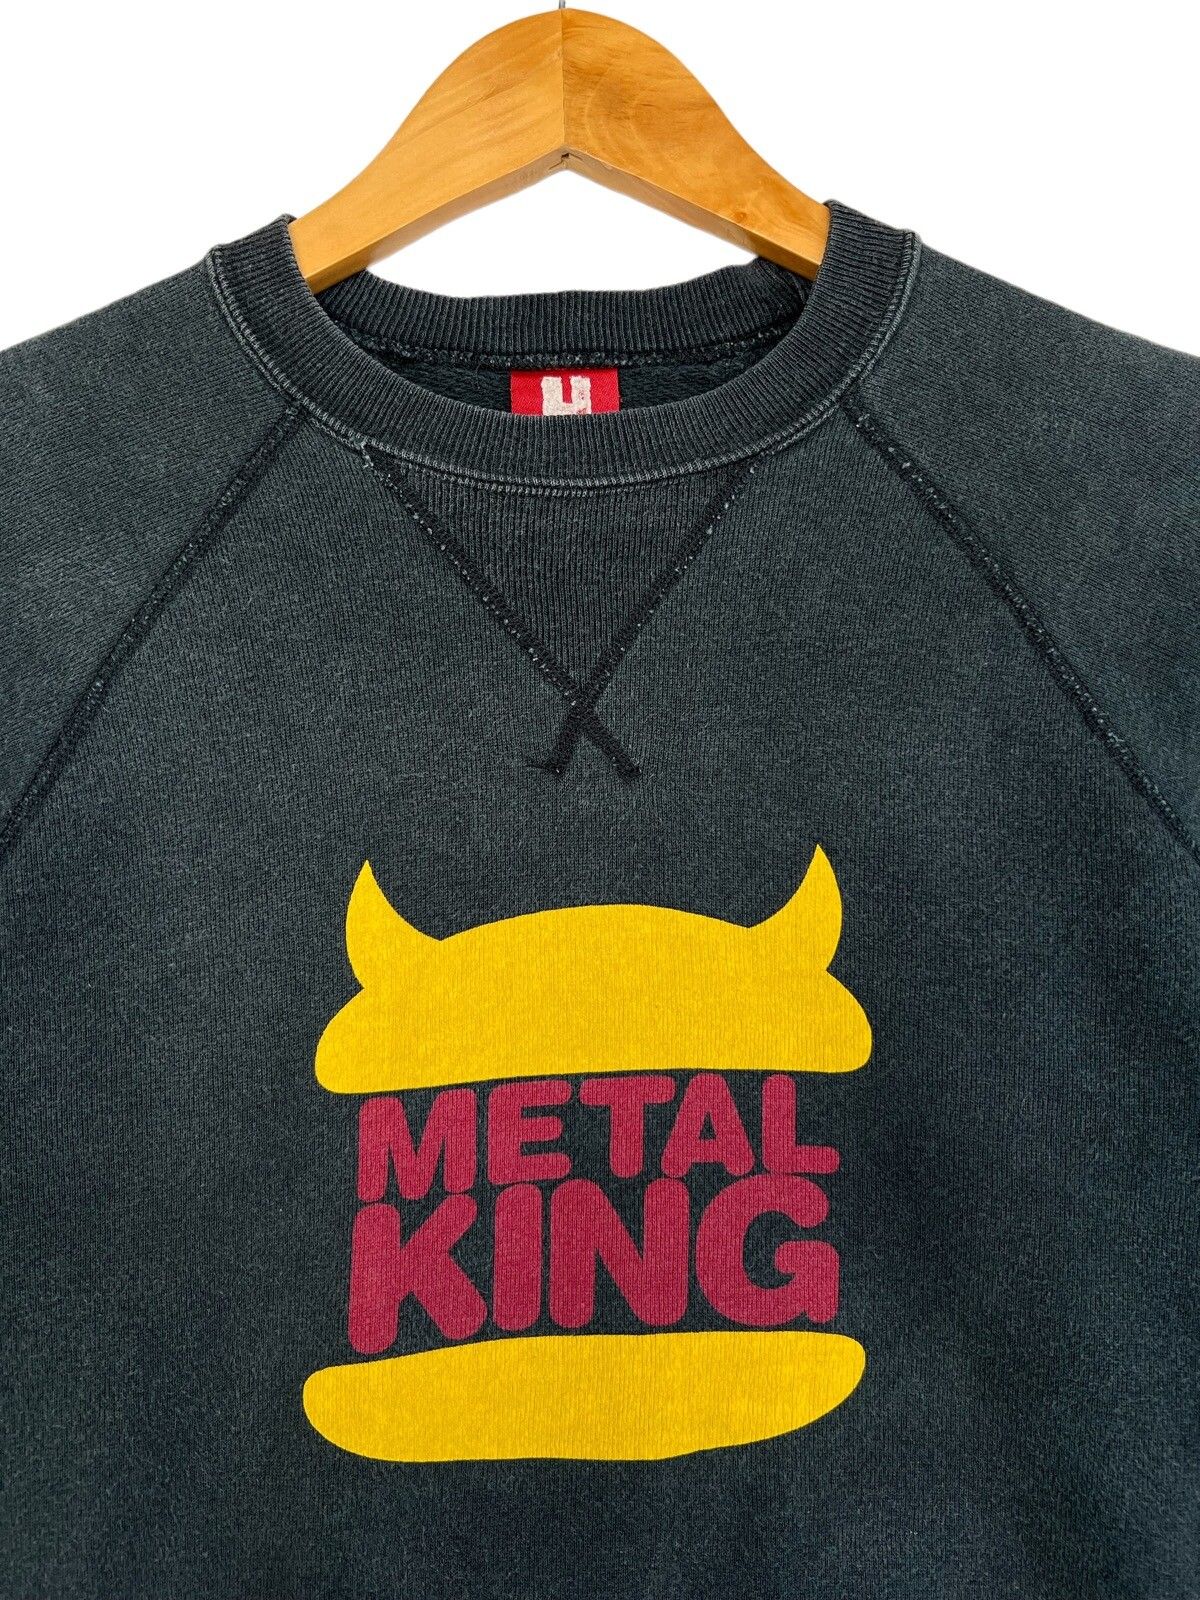 Hysteric Glamour Metal King Sweatshirt - 5